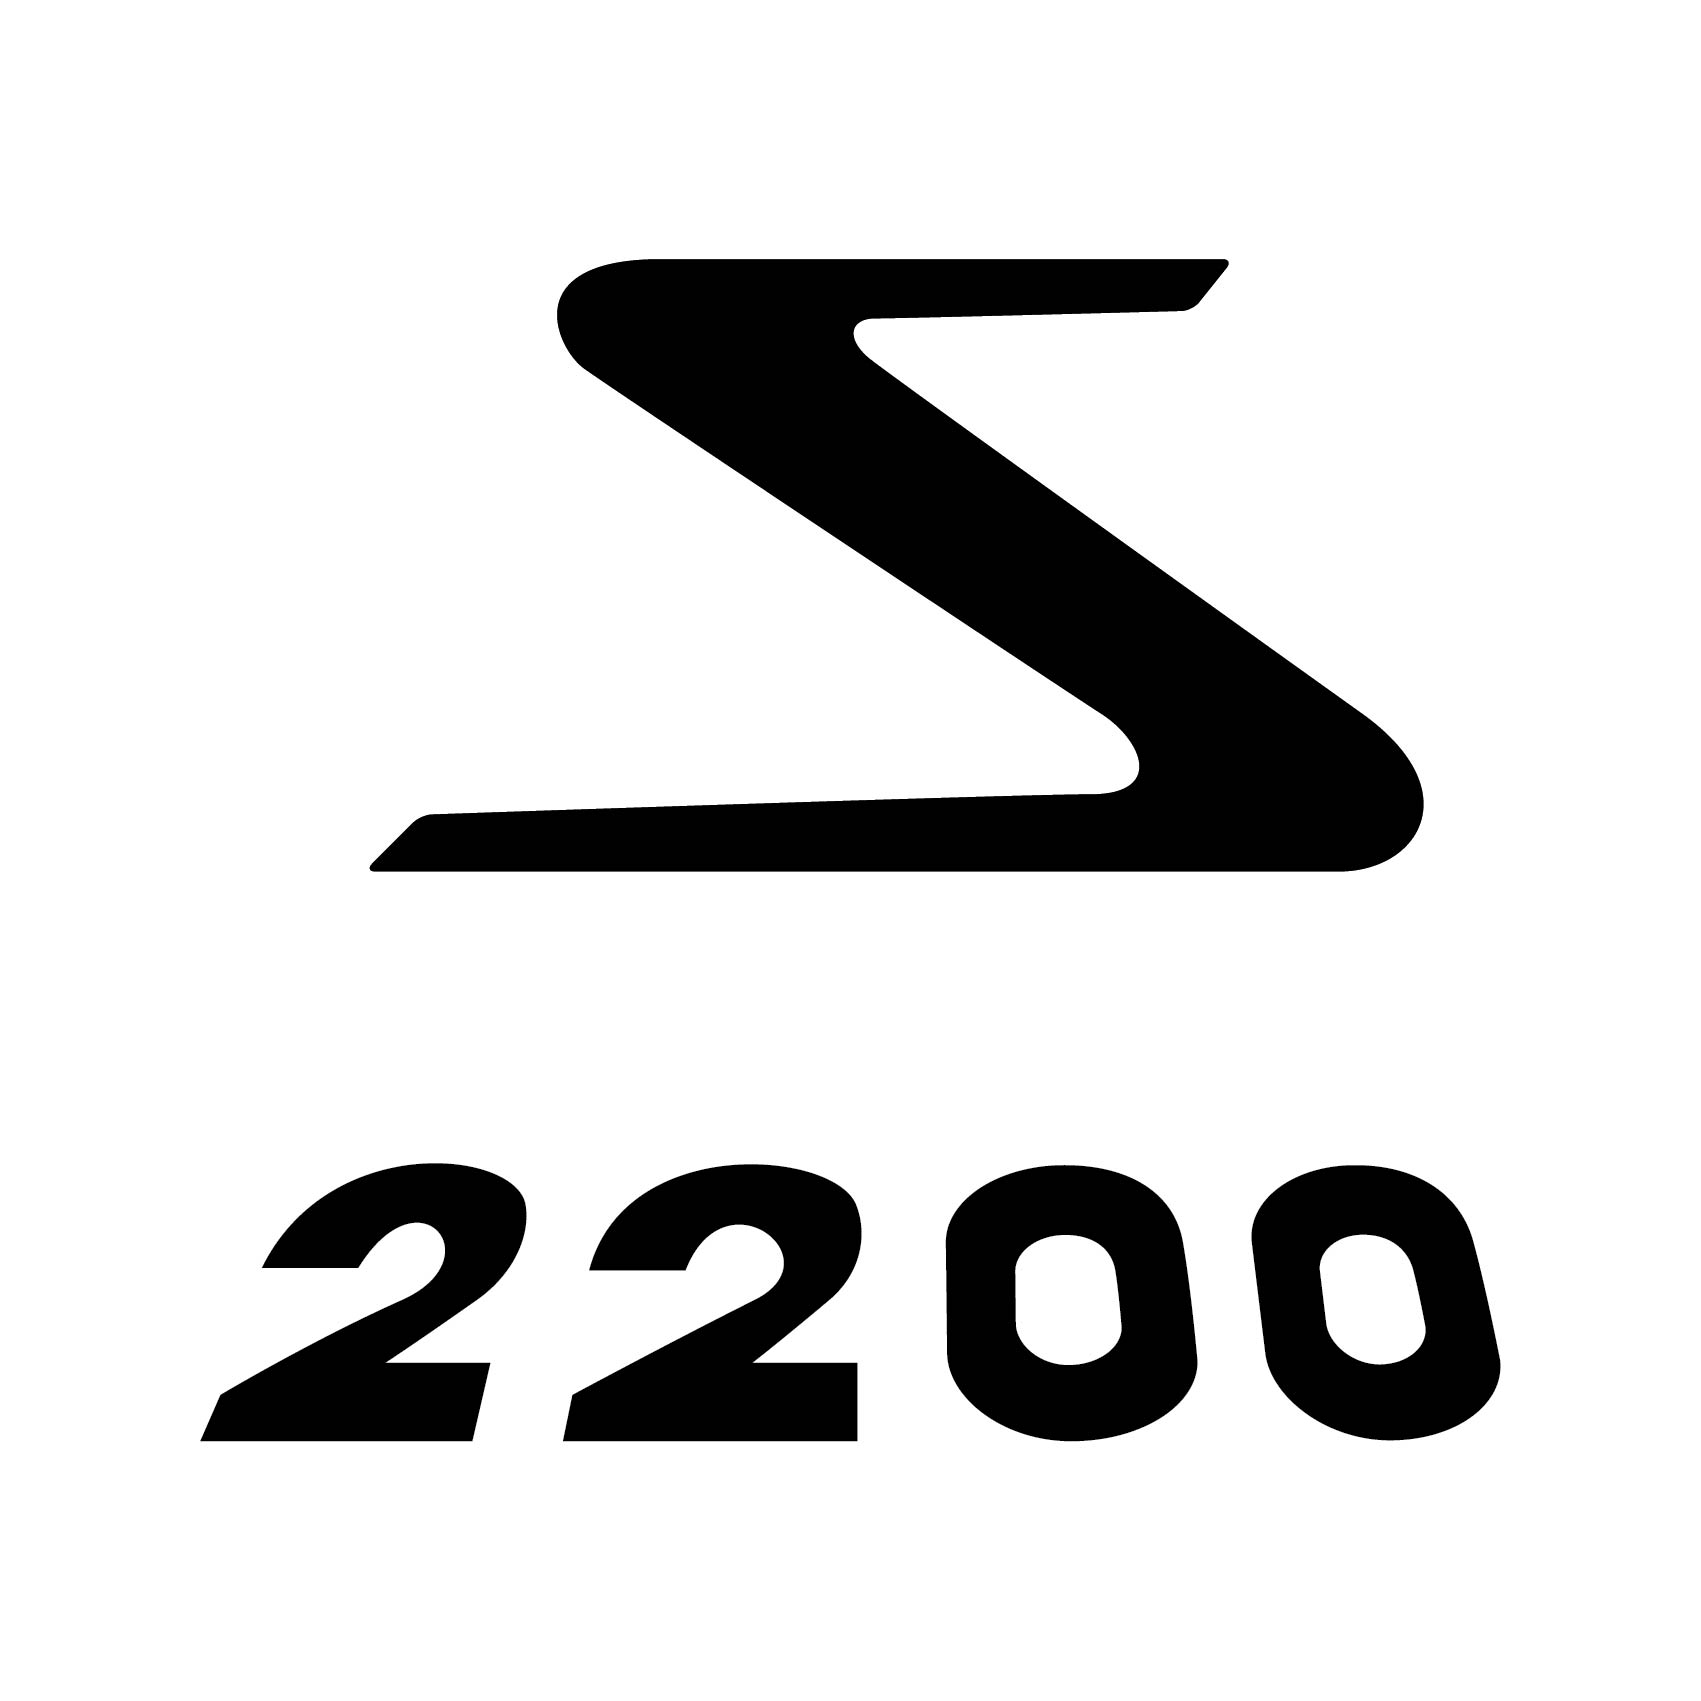 stickers-solex-s-2200-ref4solex-autocollant-solex-sticker-pour-moto-scooter-velo